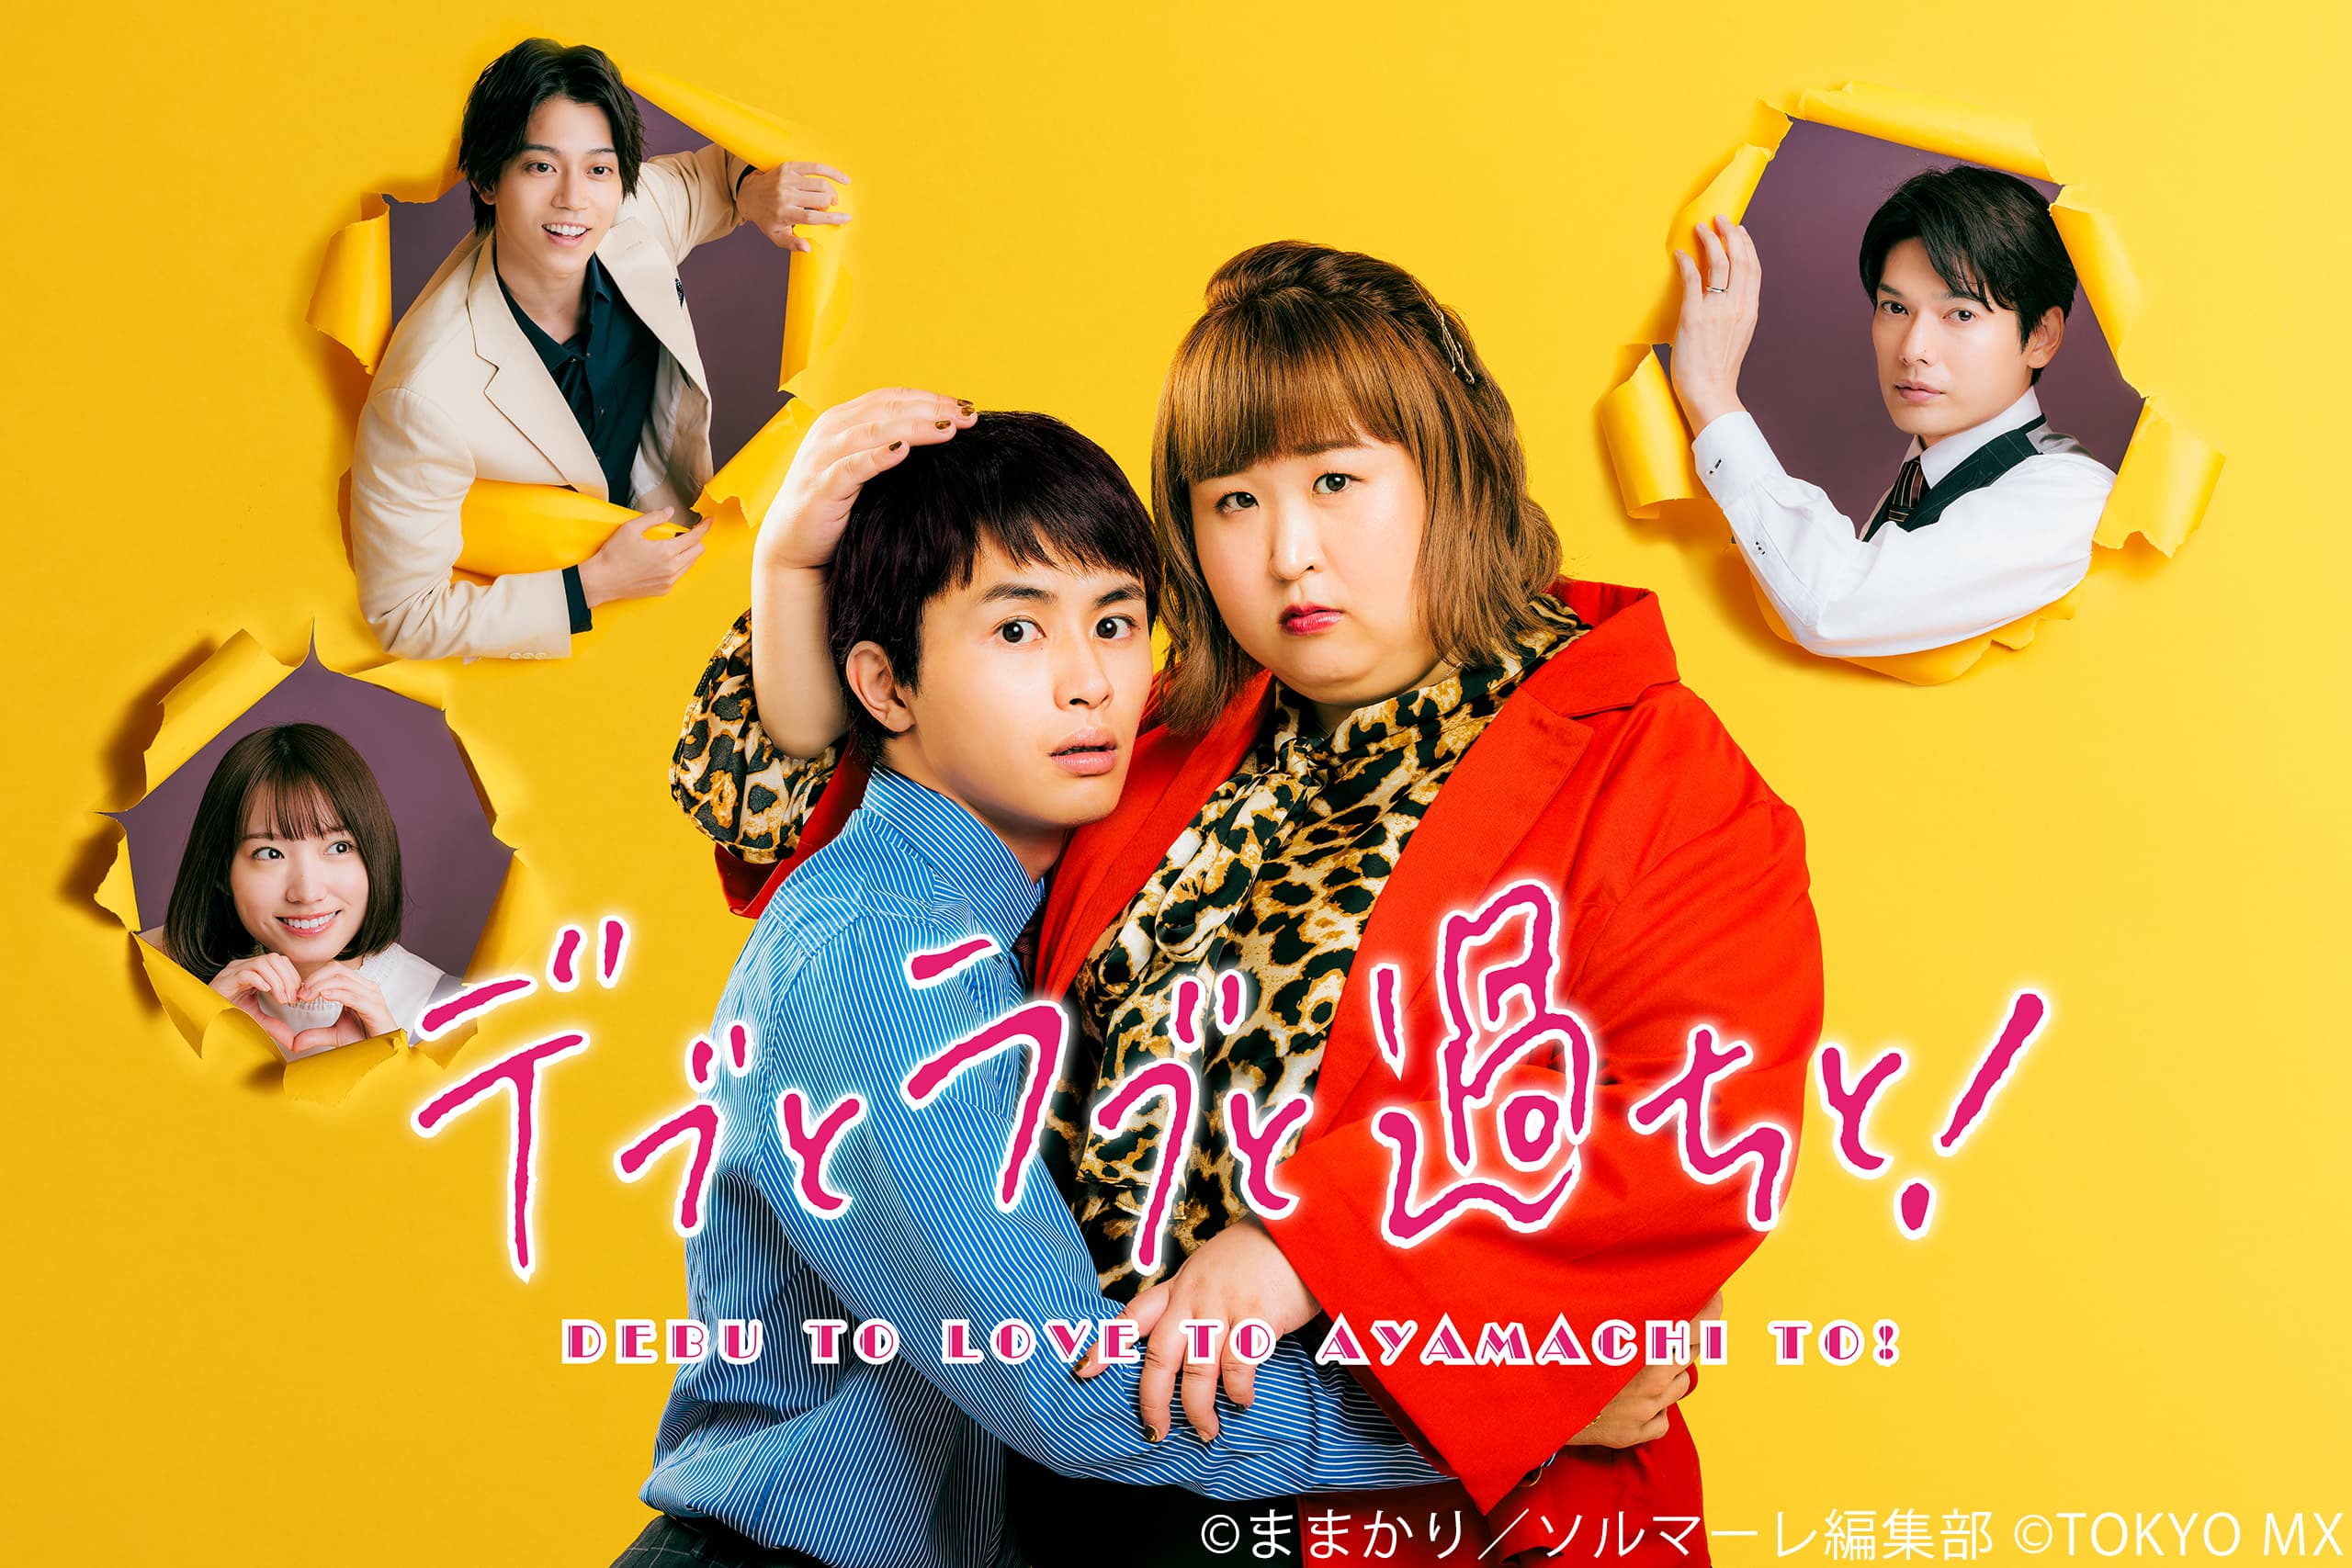 Debu To Love To Ayamachi Debu to Love to Ayamachi to! - Drama-Otaku - Japanese Drama News